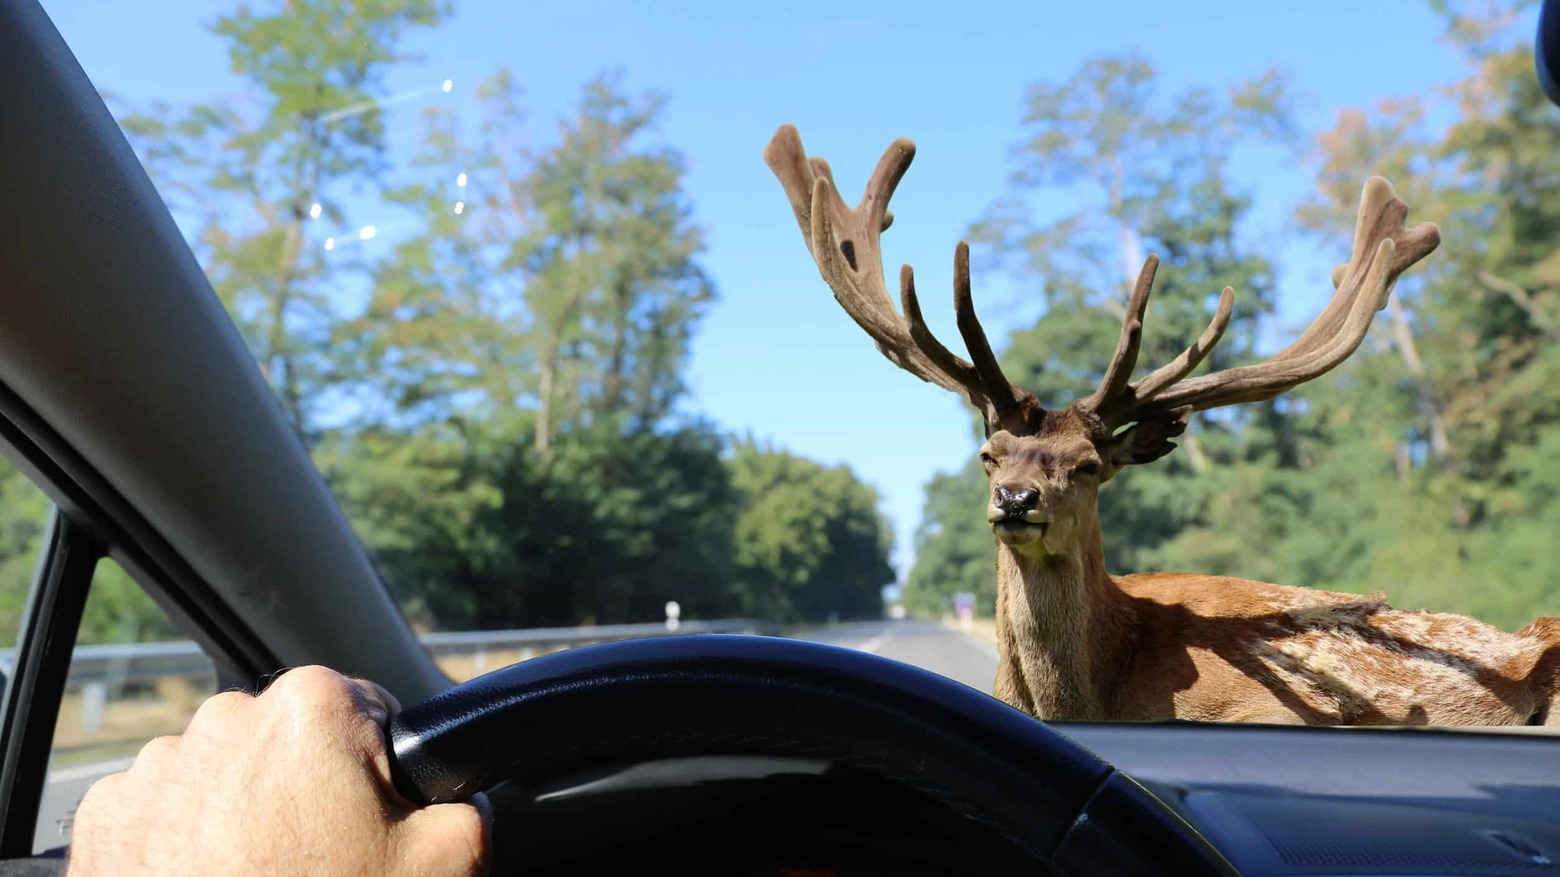 Be aware of deer crossing!